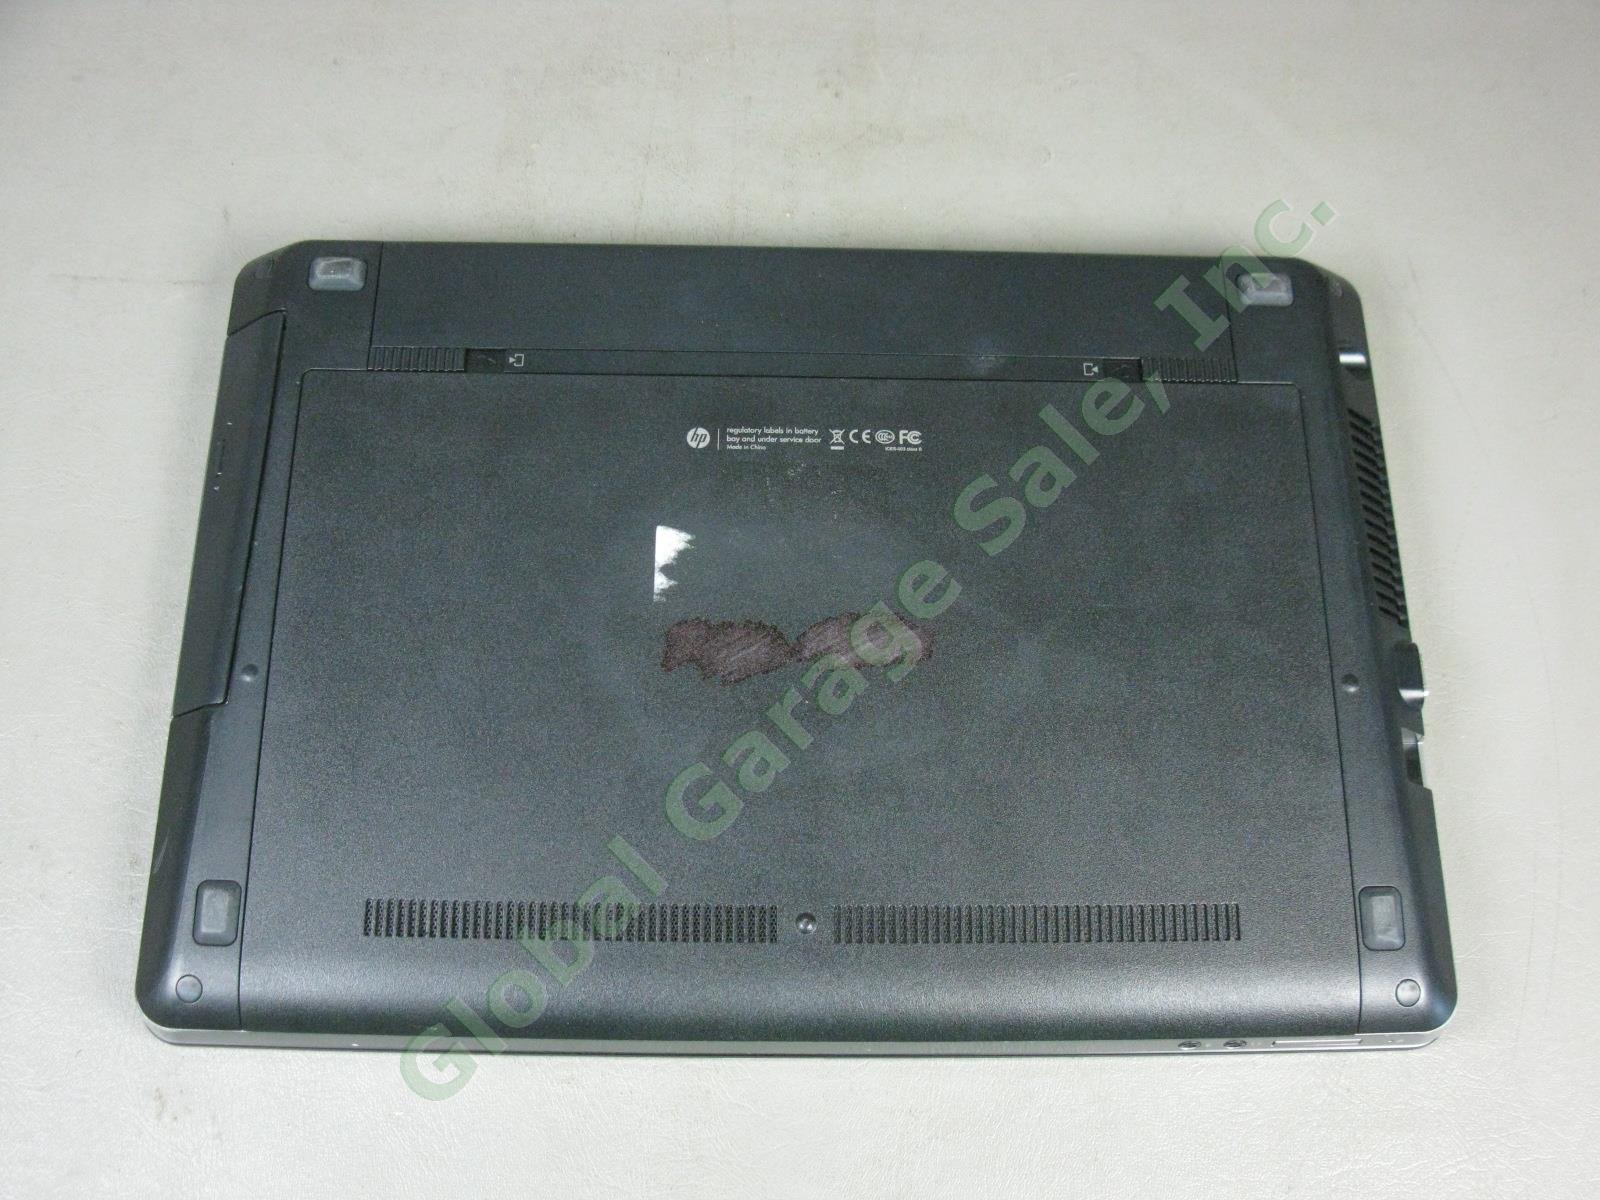 HP ProBook 4540s Laptop Computer Intel i5 2.60GHz 300GB HDD 4GB RAM Win 10 Pro 7